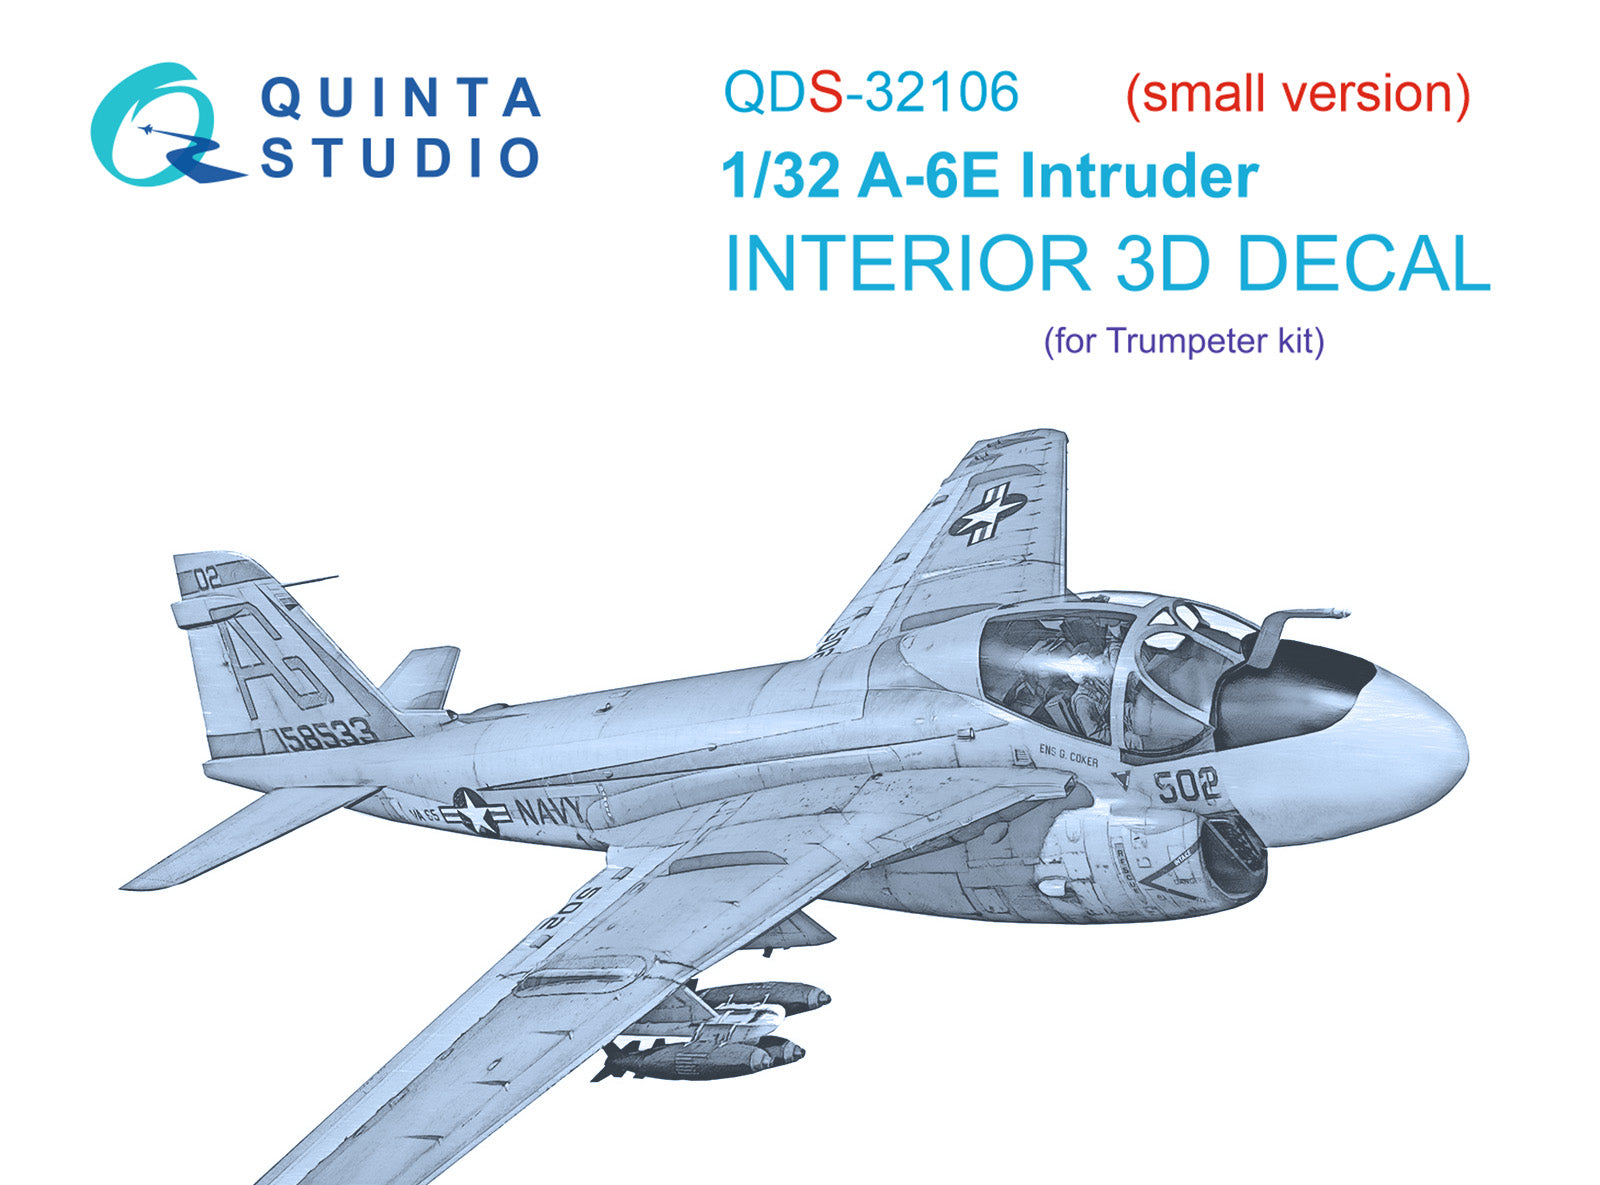 Quinta Studio - 1/32 A-6E intruder QDS-32106 for Trumpeter kit (small version)